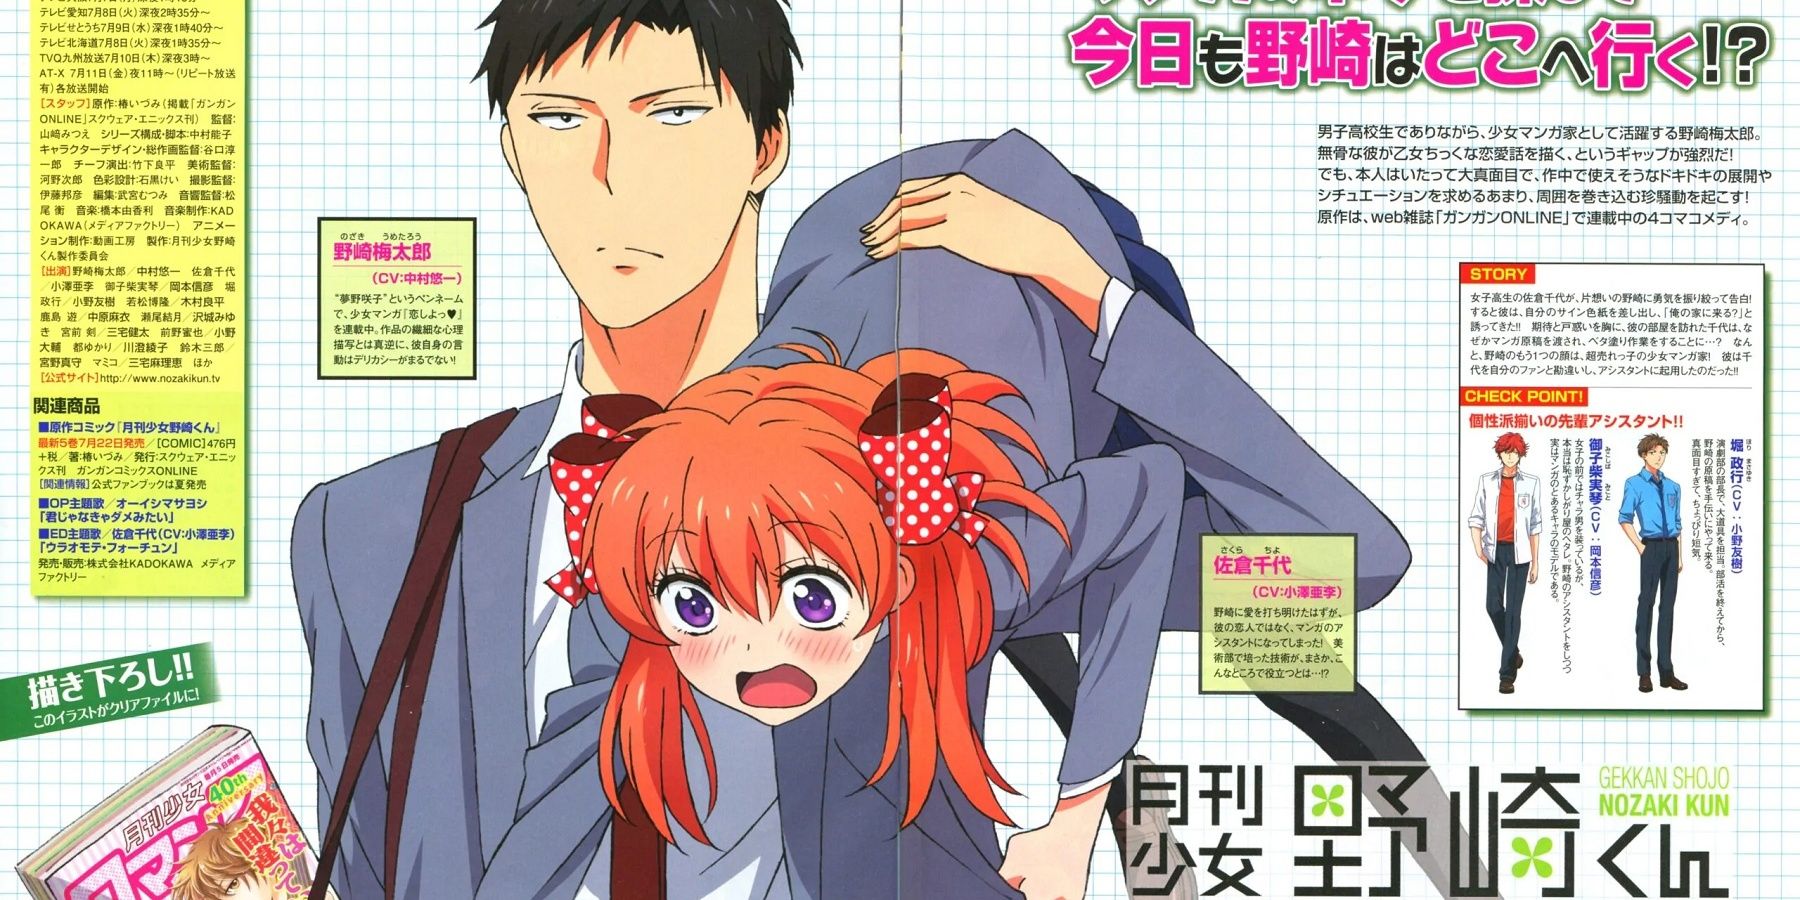 Flawed Protagonists of the Manga “Romance” – Monthly Girls’ Nozaki-kun